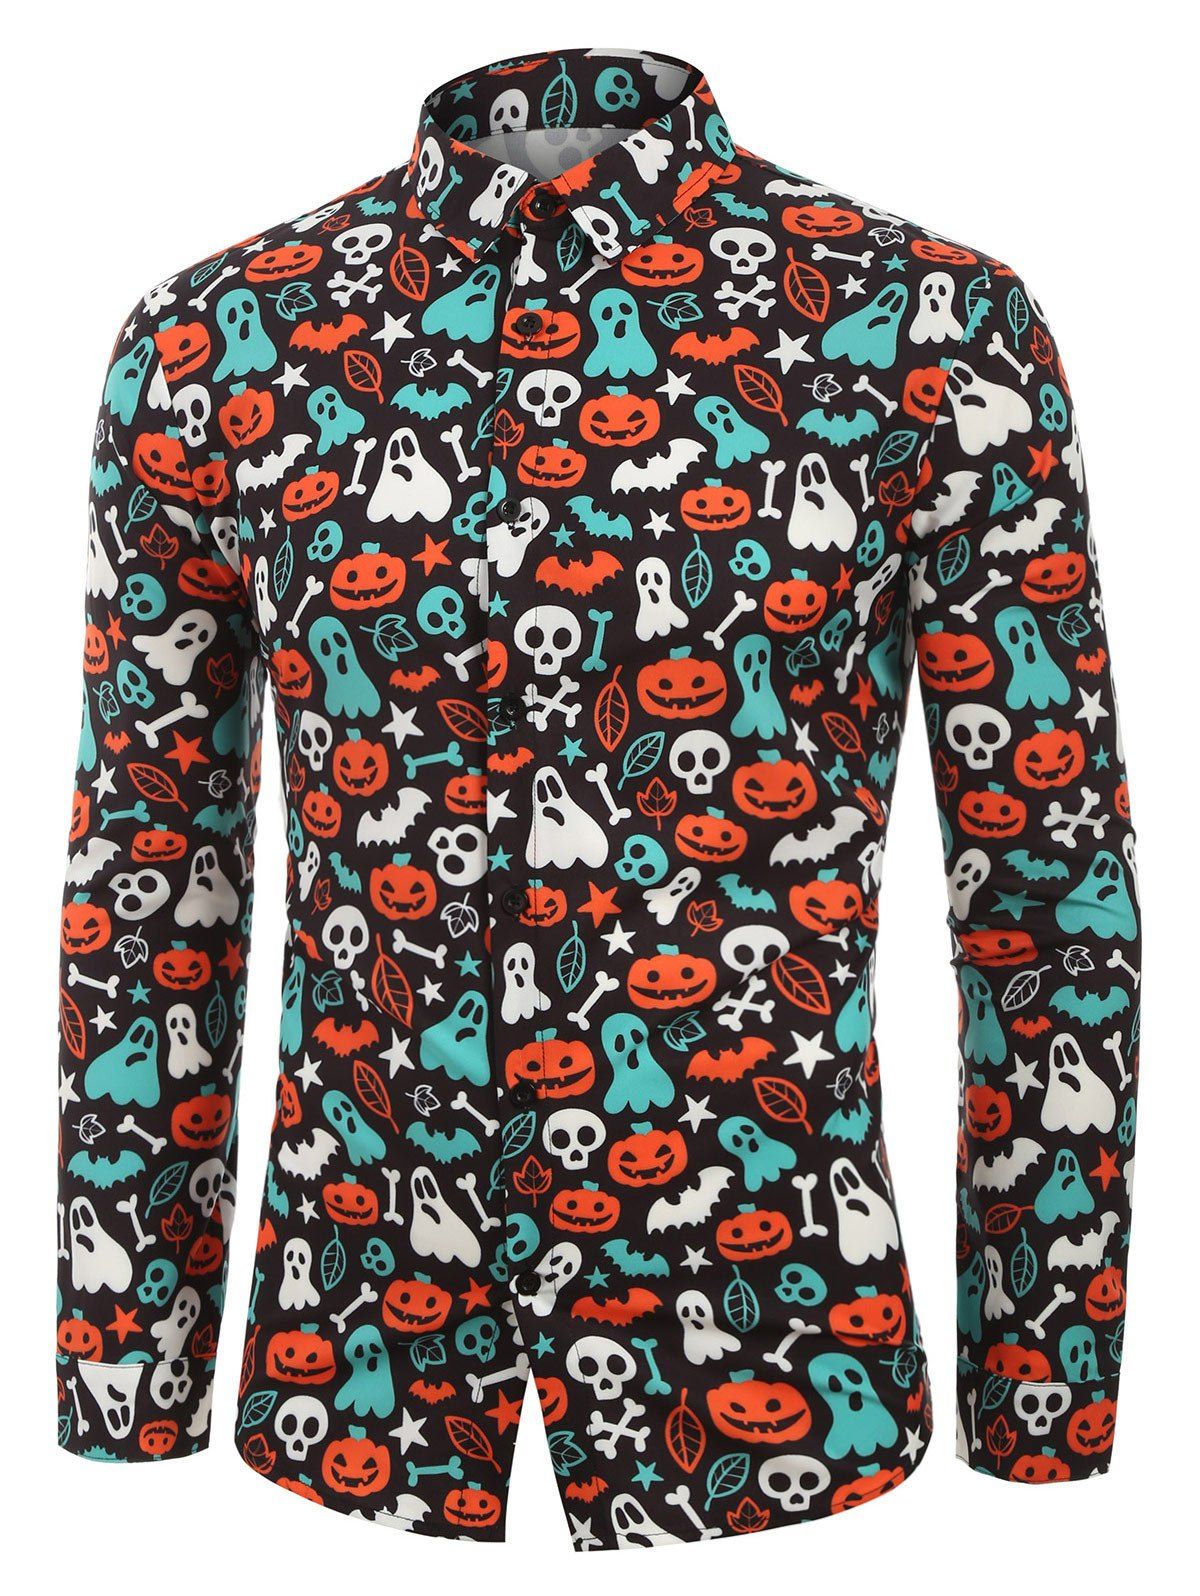 Halloween Skull Pumpkin Leaf Star Print Button Up Shirt - multicolor XS